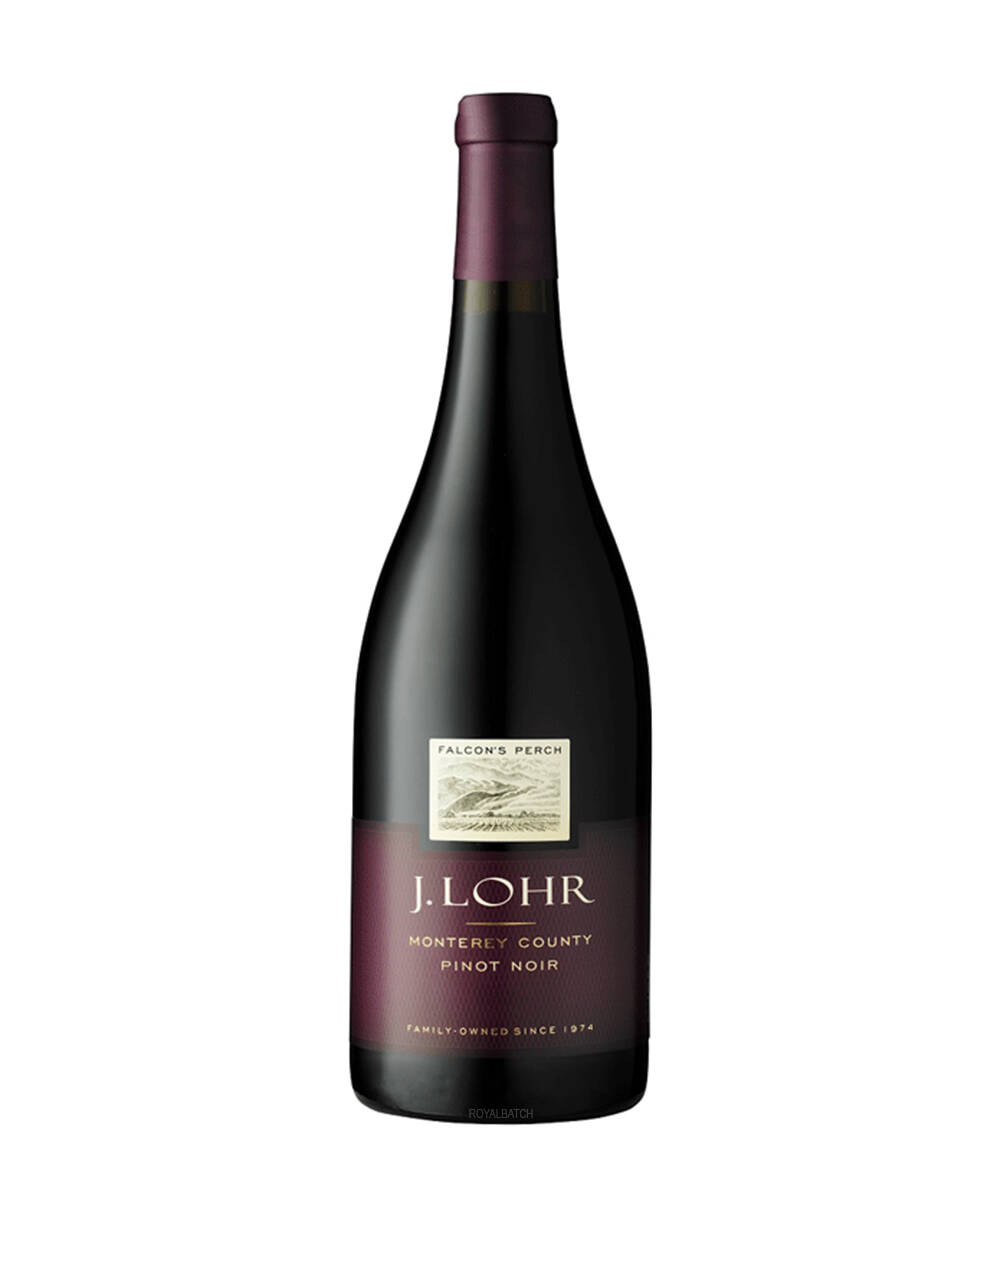 J. Lohr Falcons Perch Pinot Noir Red Wine